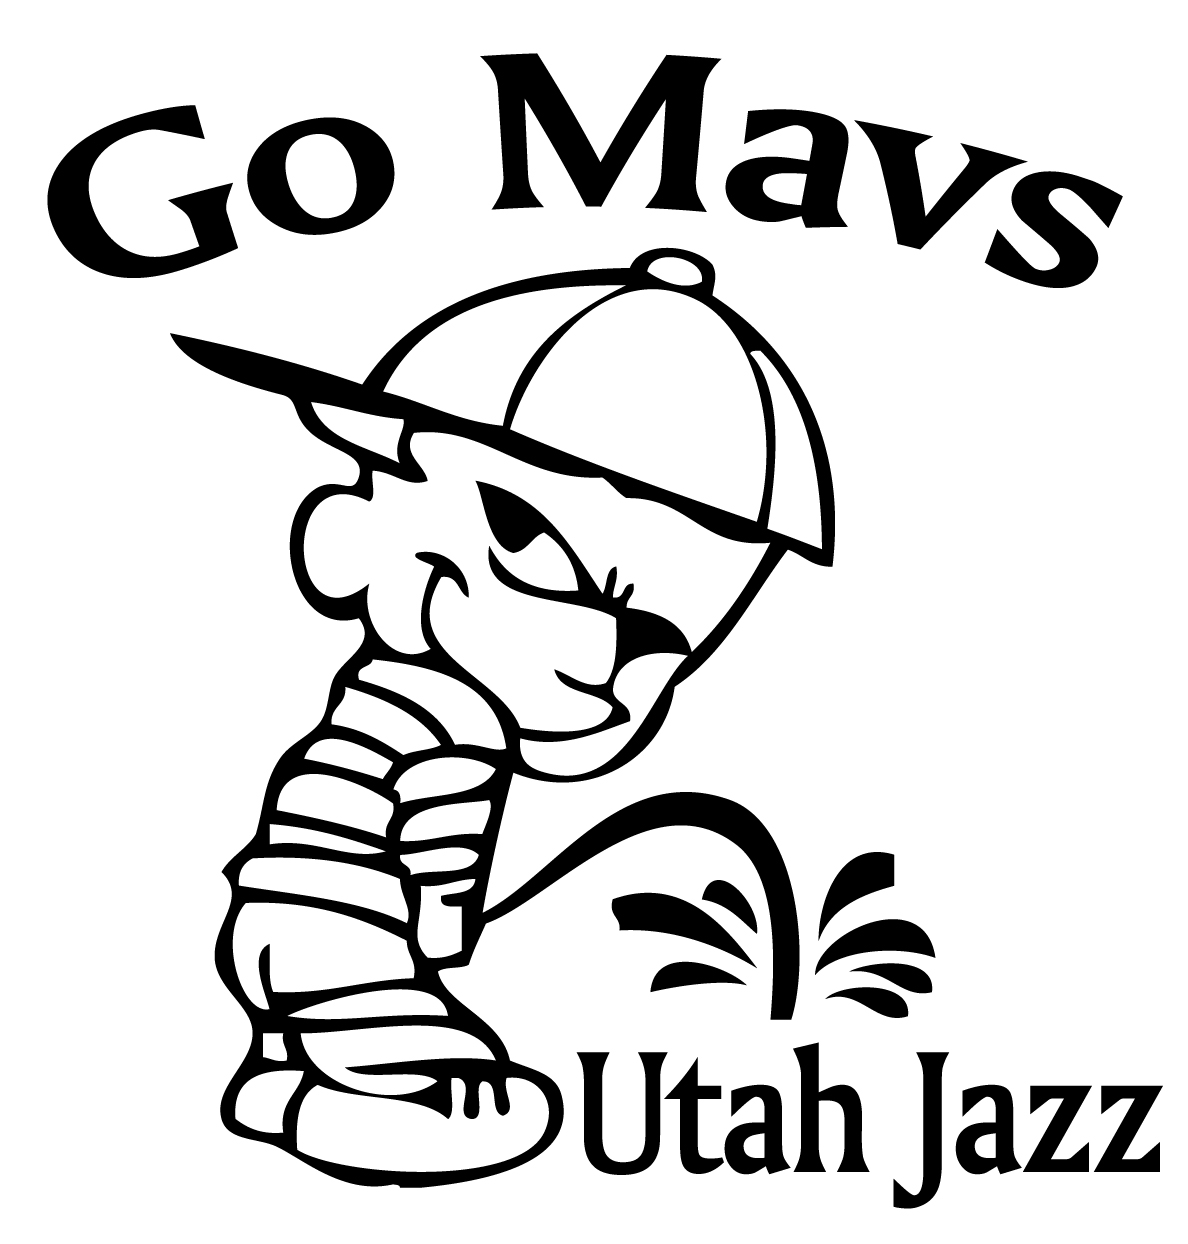 Mavs Pee On Utah Jazz Sticker